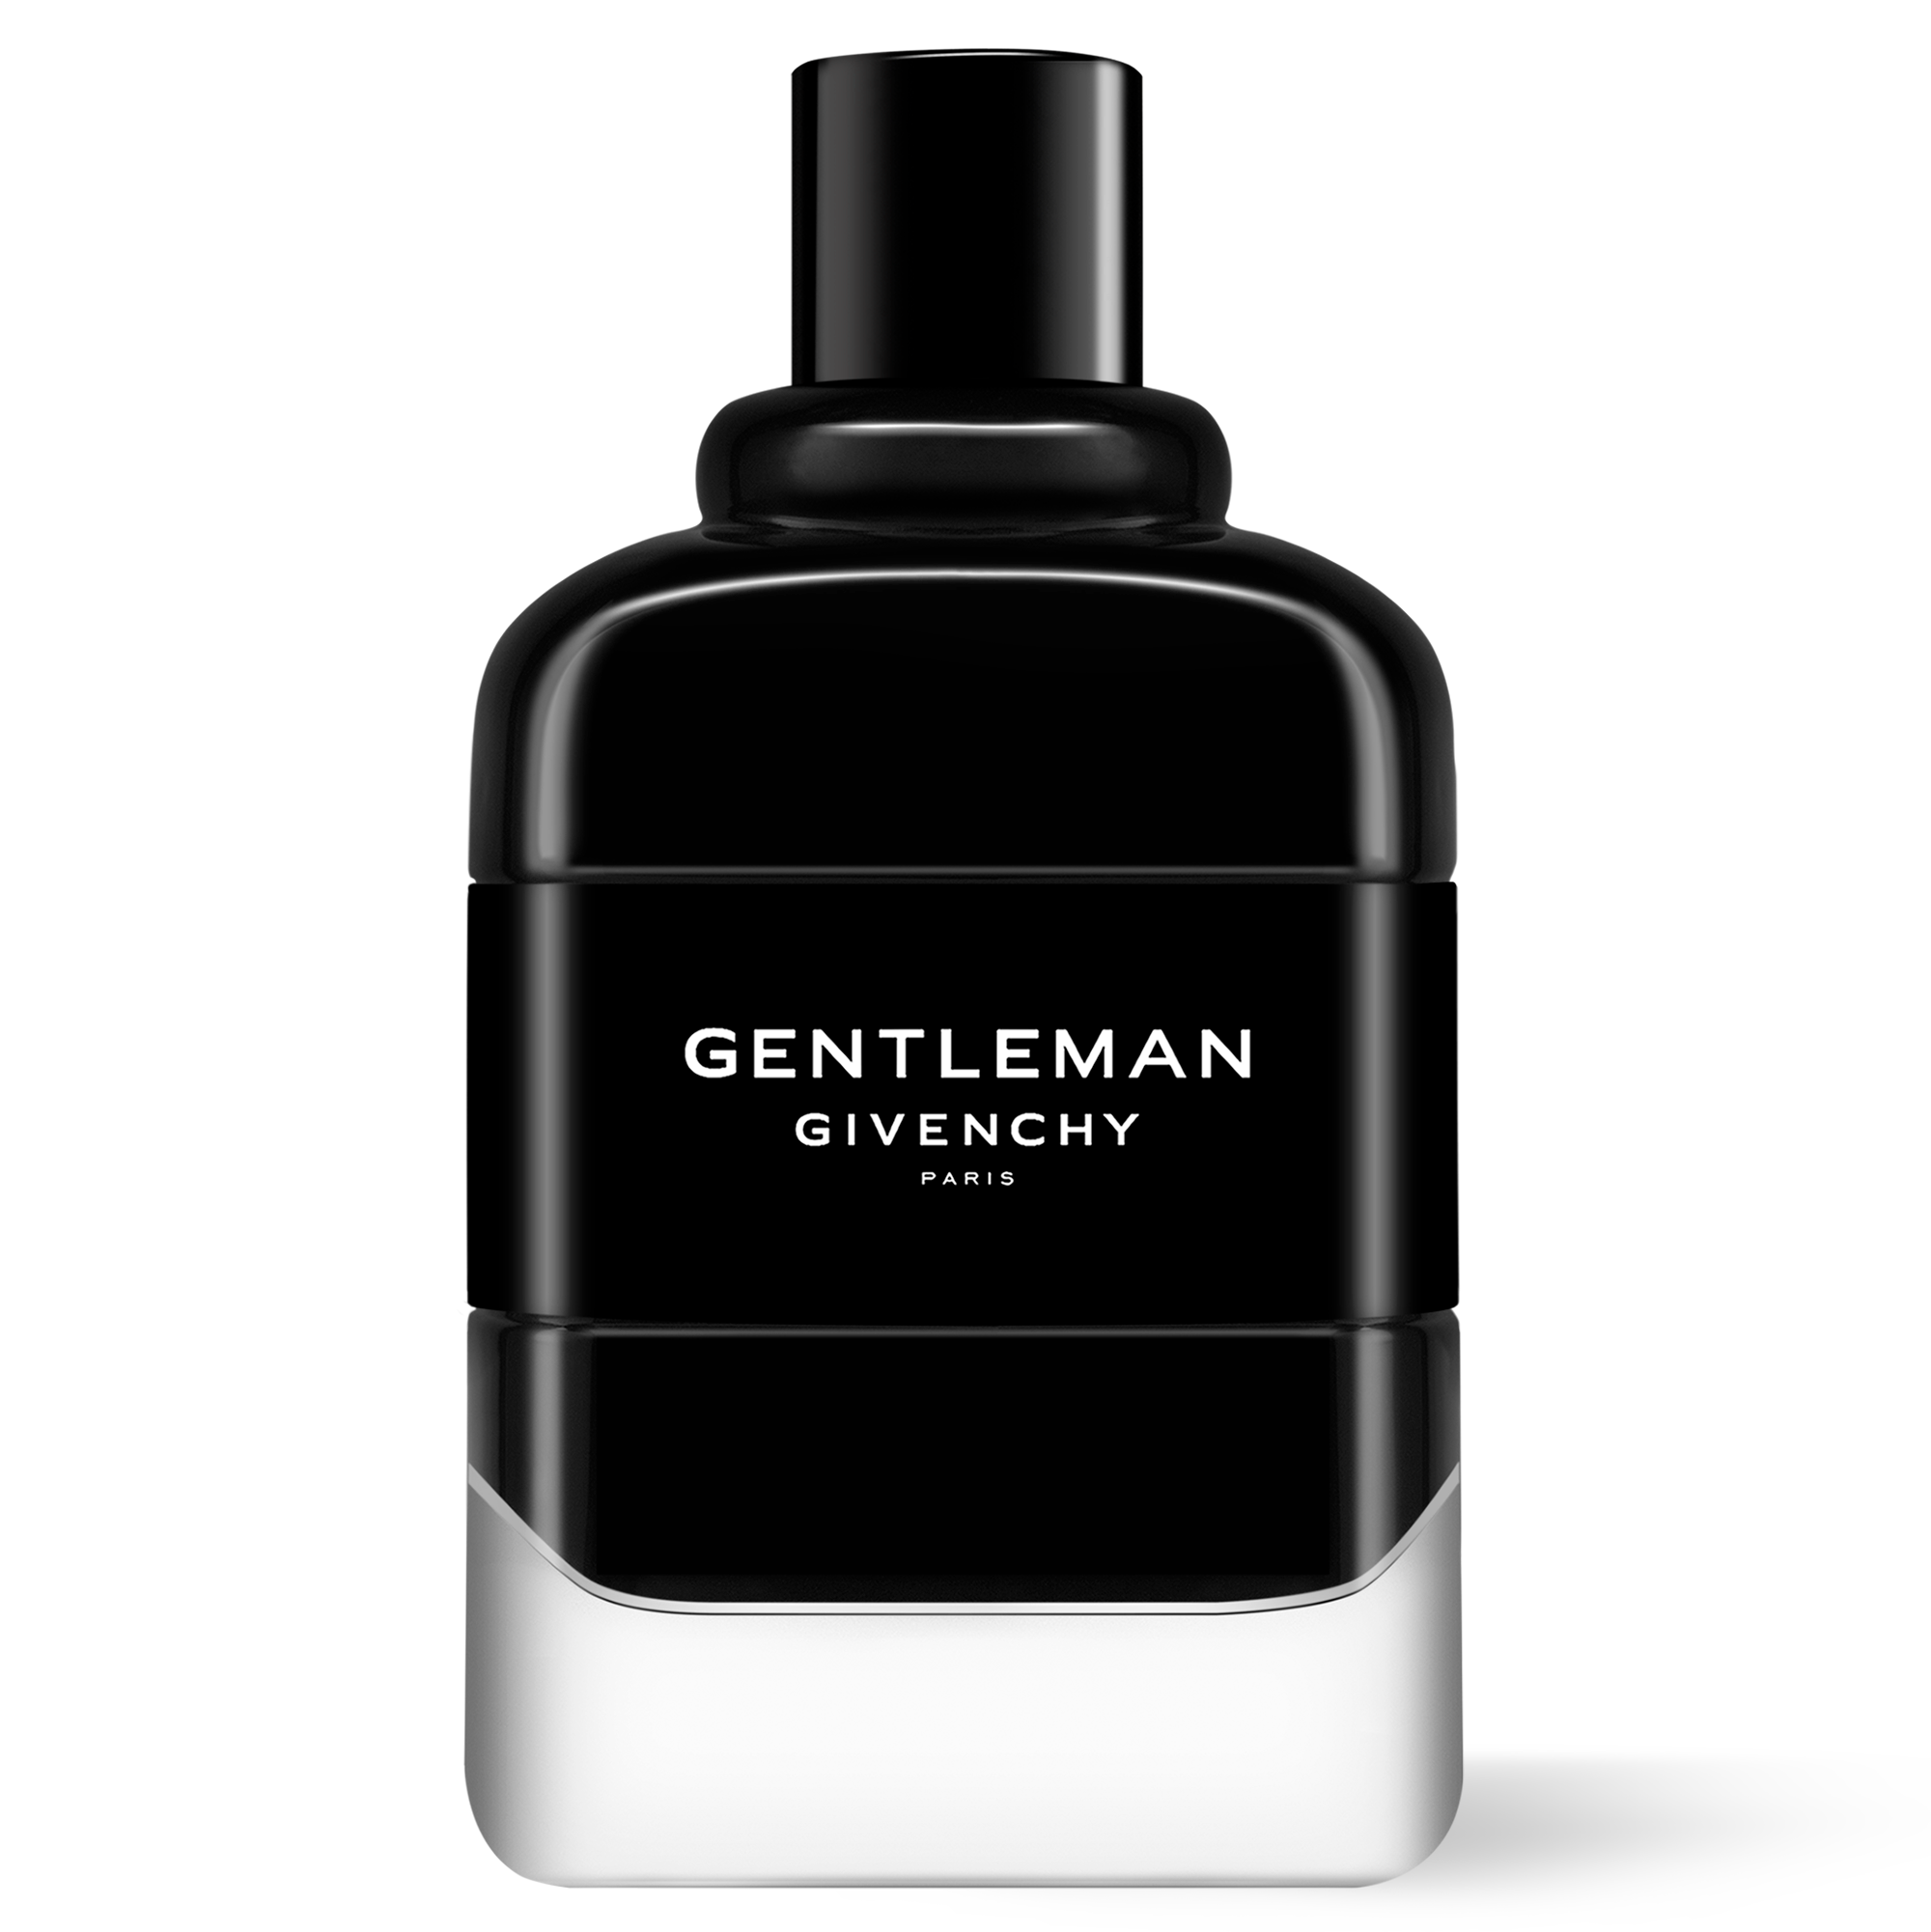 black gentleman's collection perfume